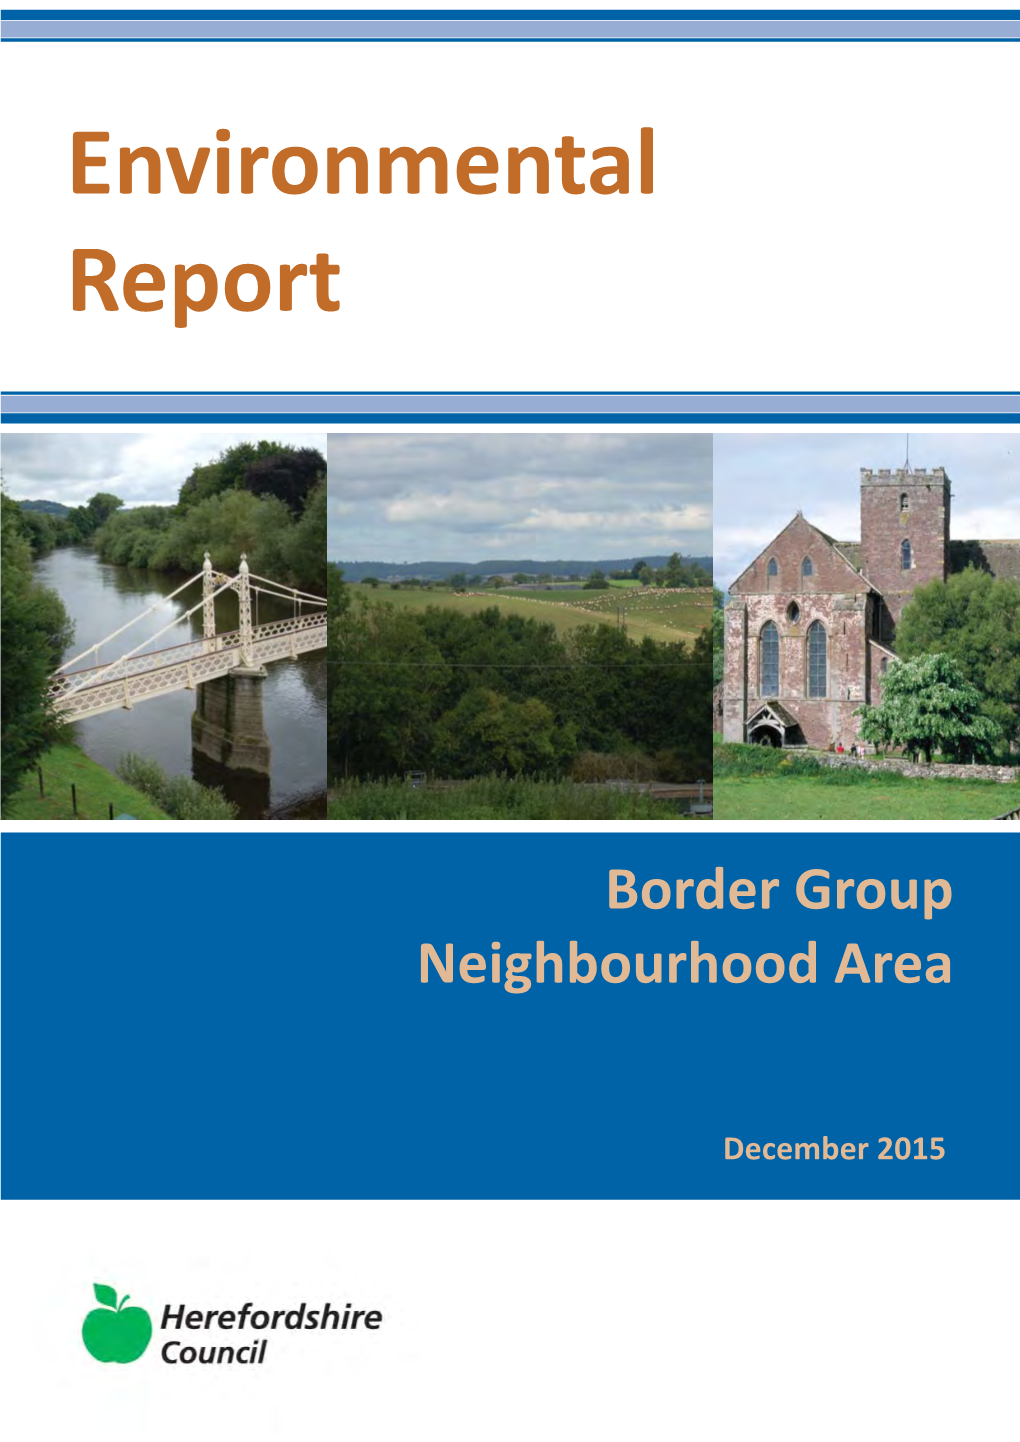 Border Group Environmental Report December 2015